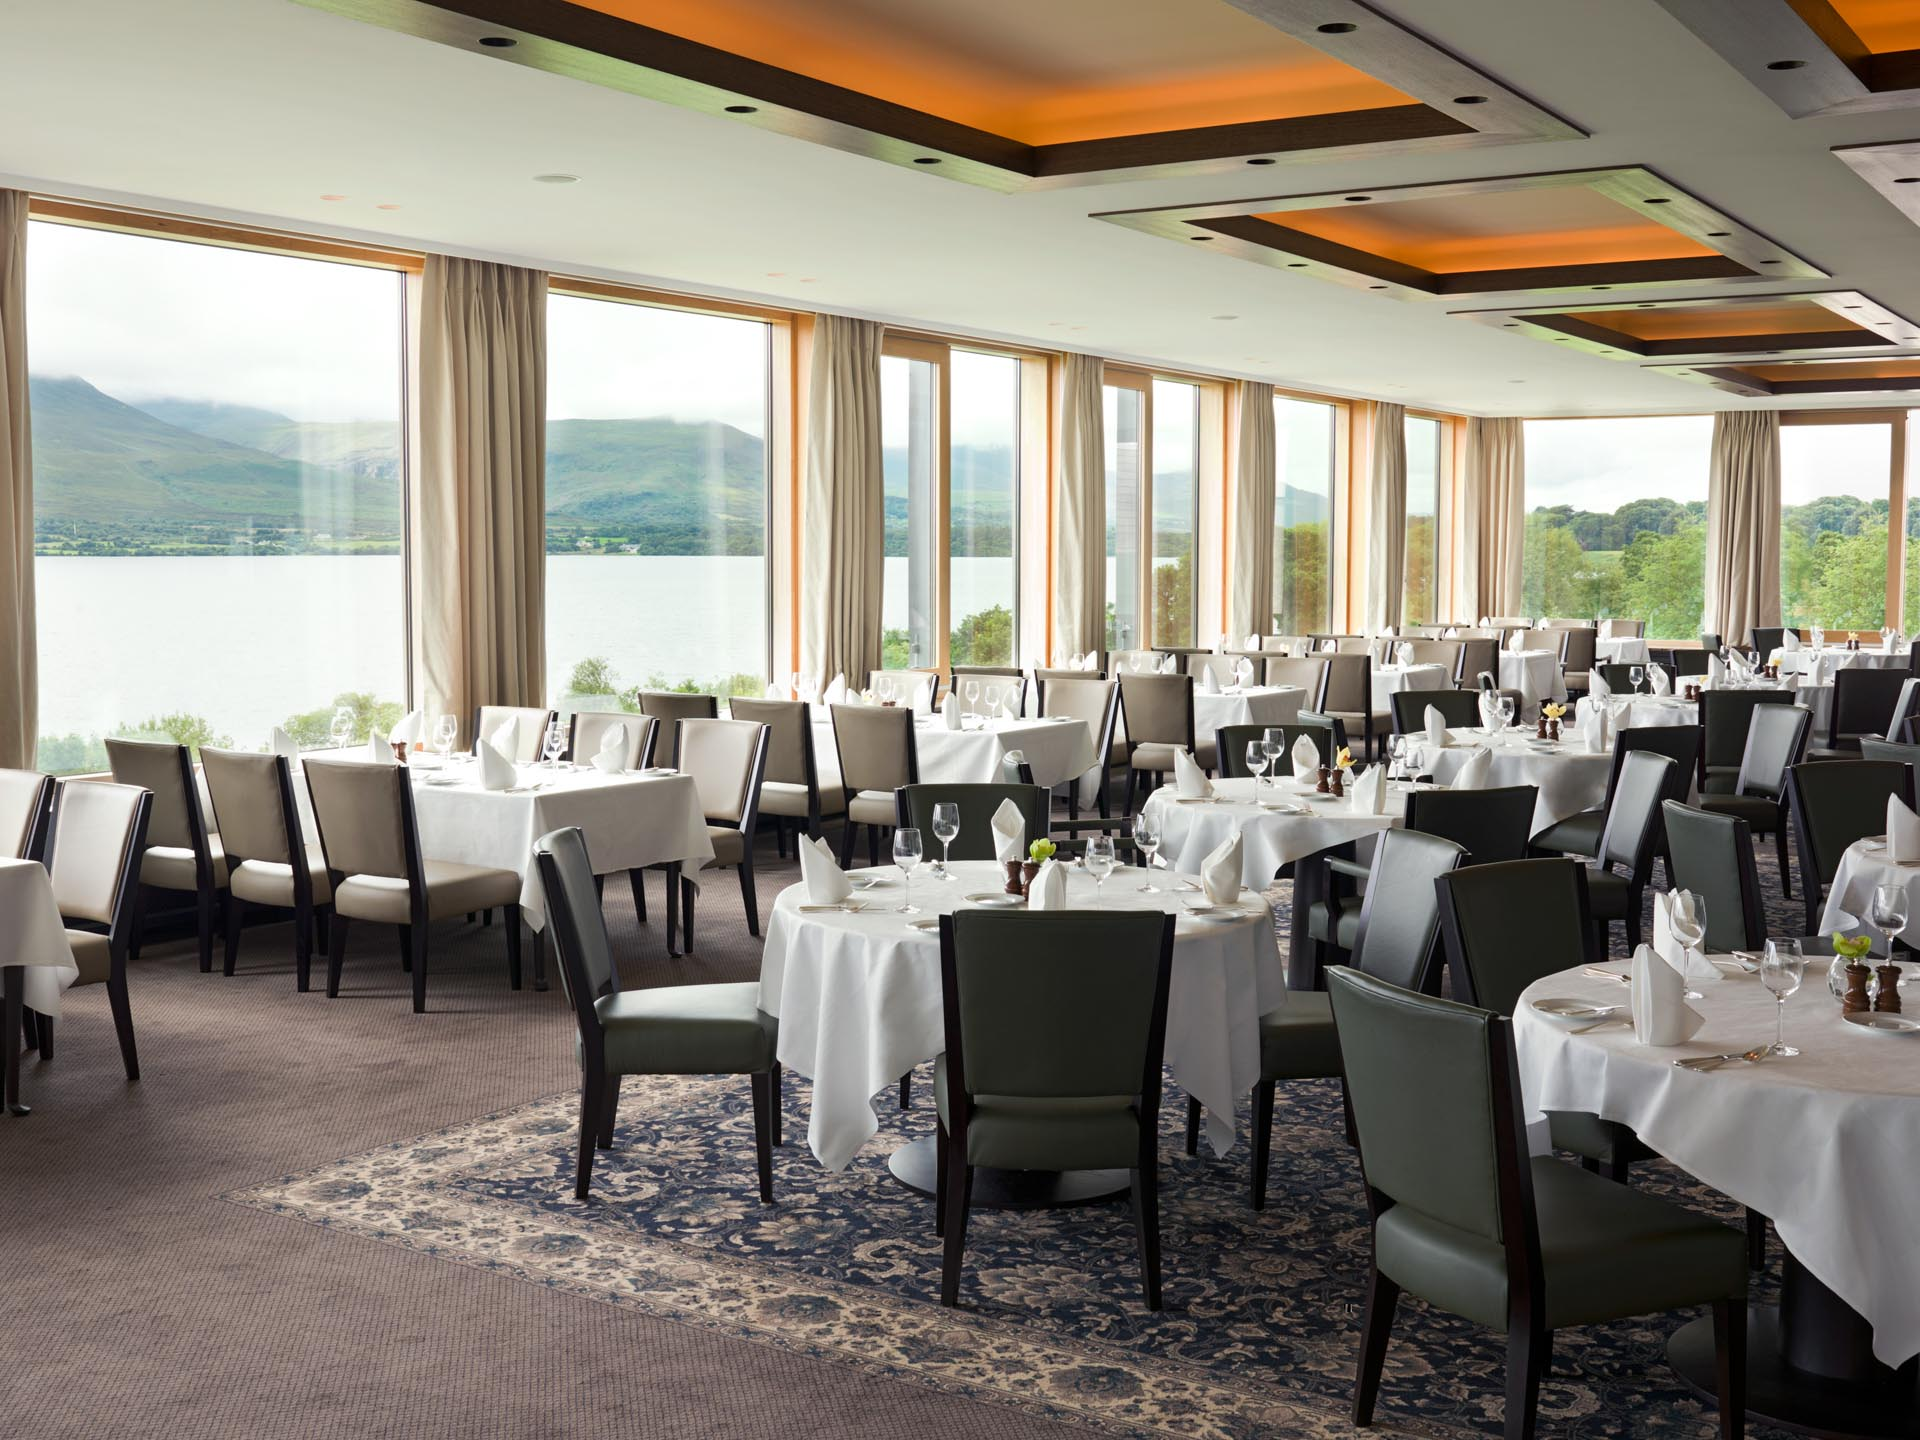 The Europe Hotel & Resort Lake Restaurant